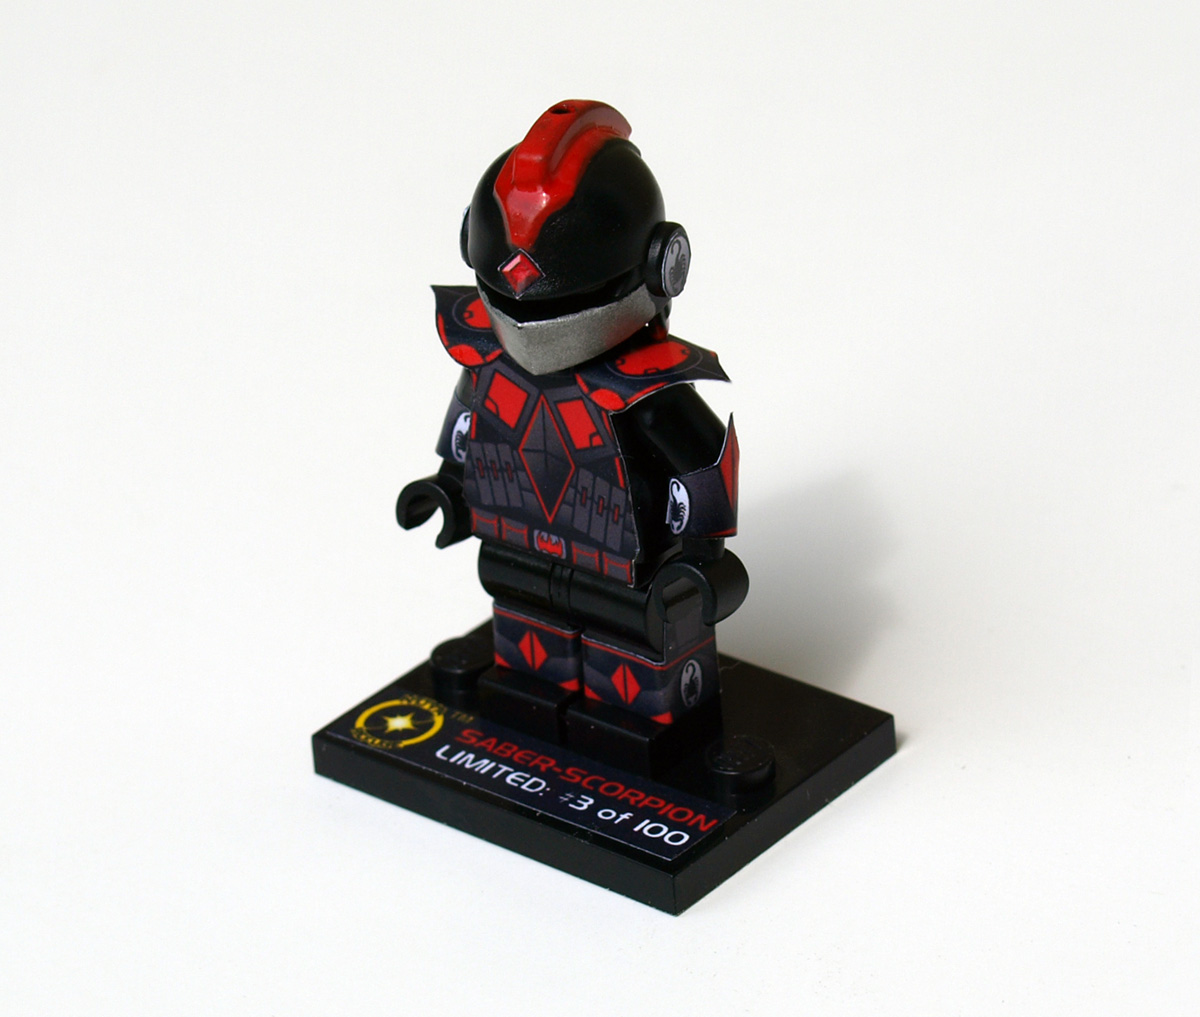 Custom LEGO Minifigure: Saber-Scorpion Enomeg